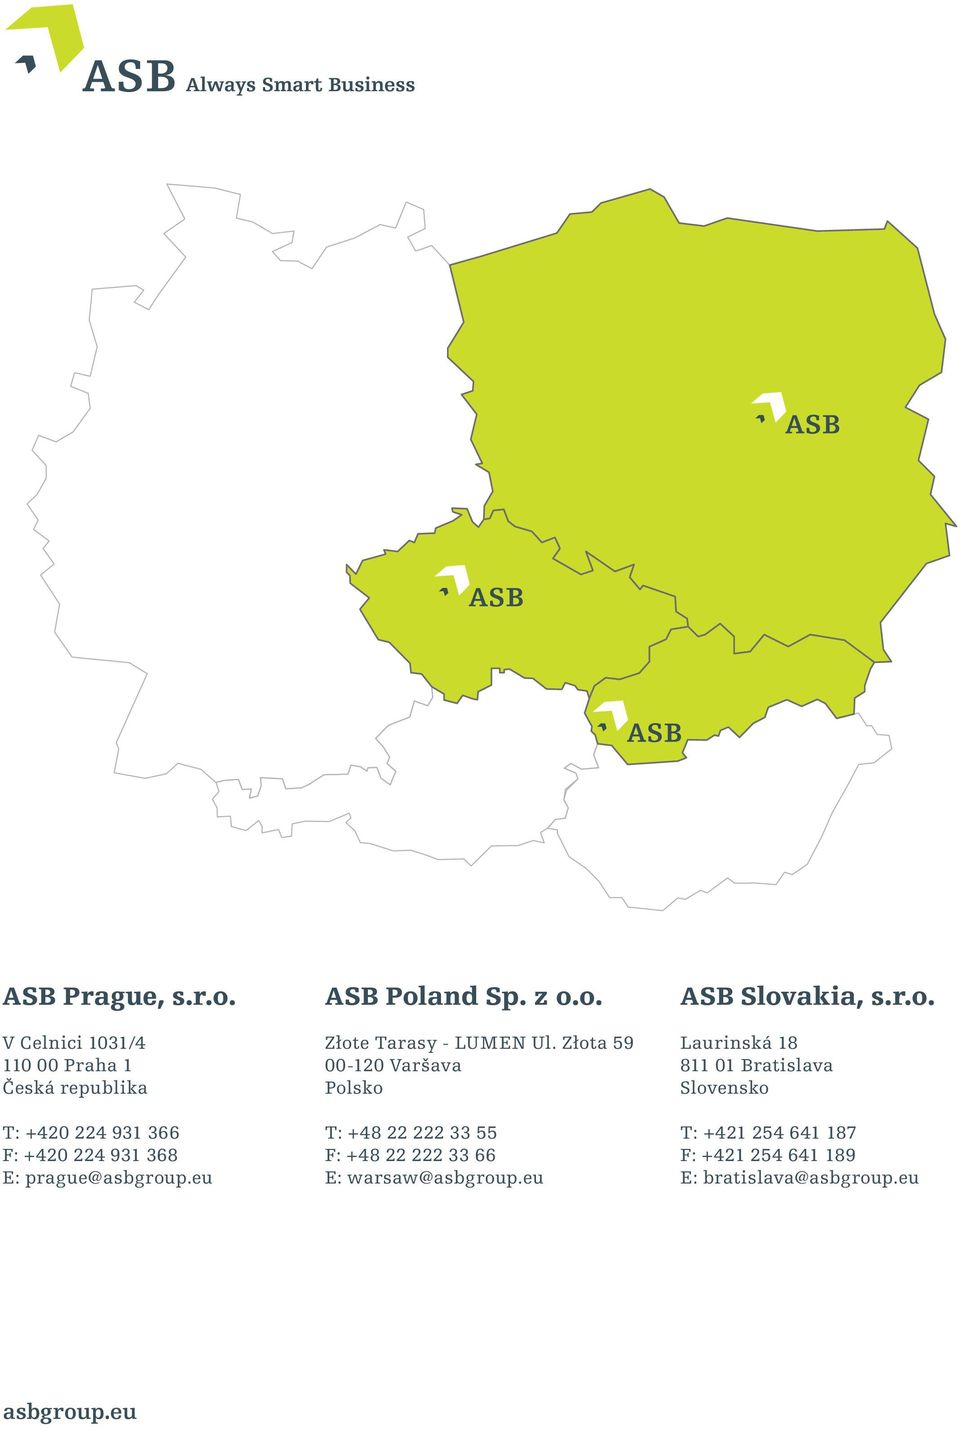 prague@asbgroup.eu ASB Poland Sp. z o.o. Złote Tarasy - LUMEN Ul.